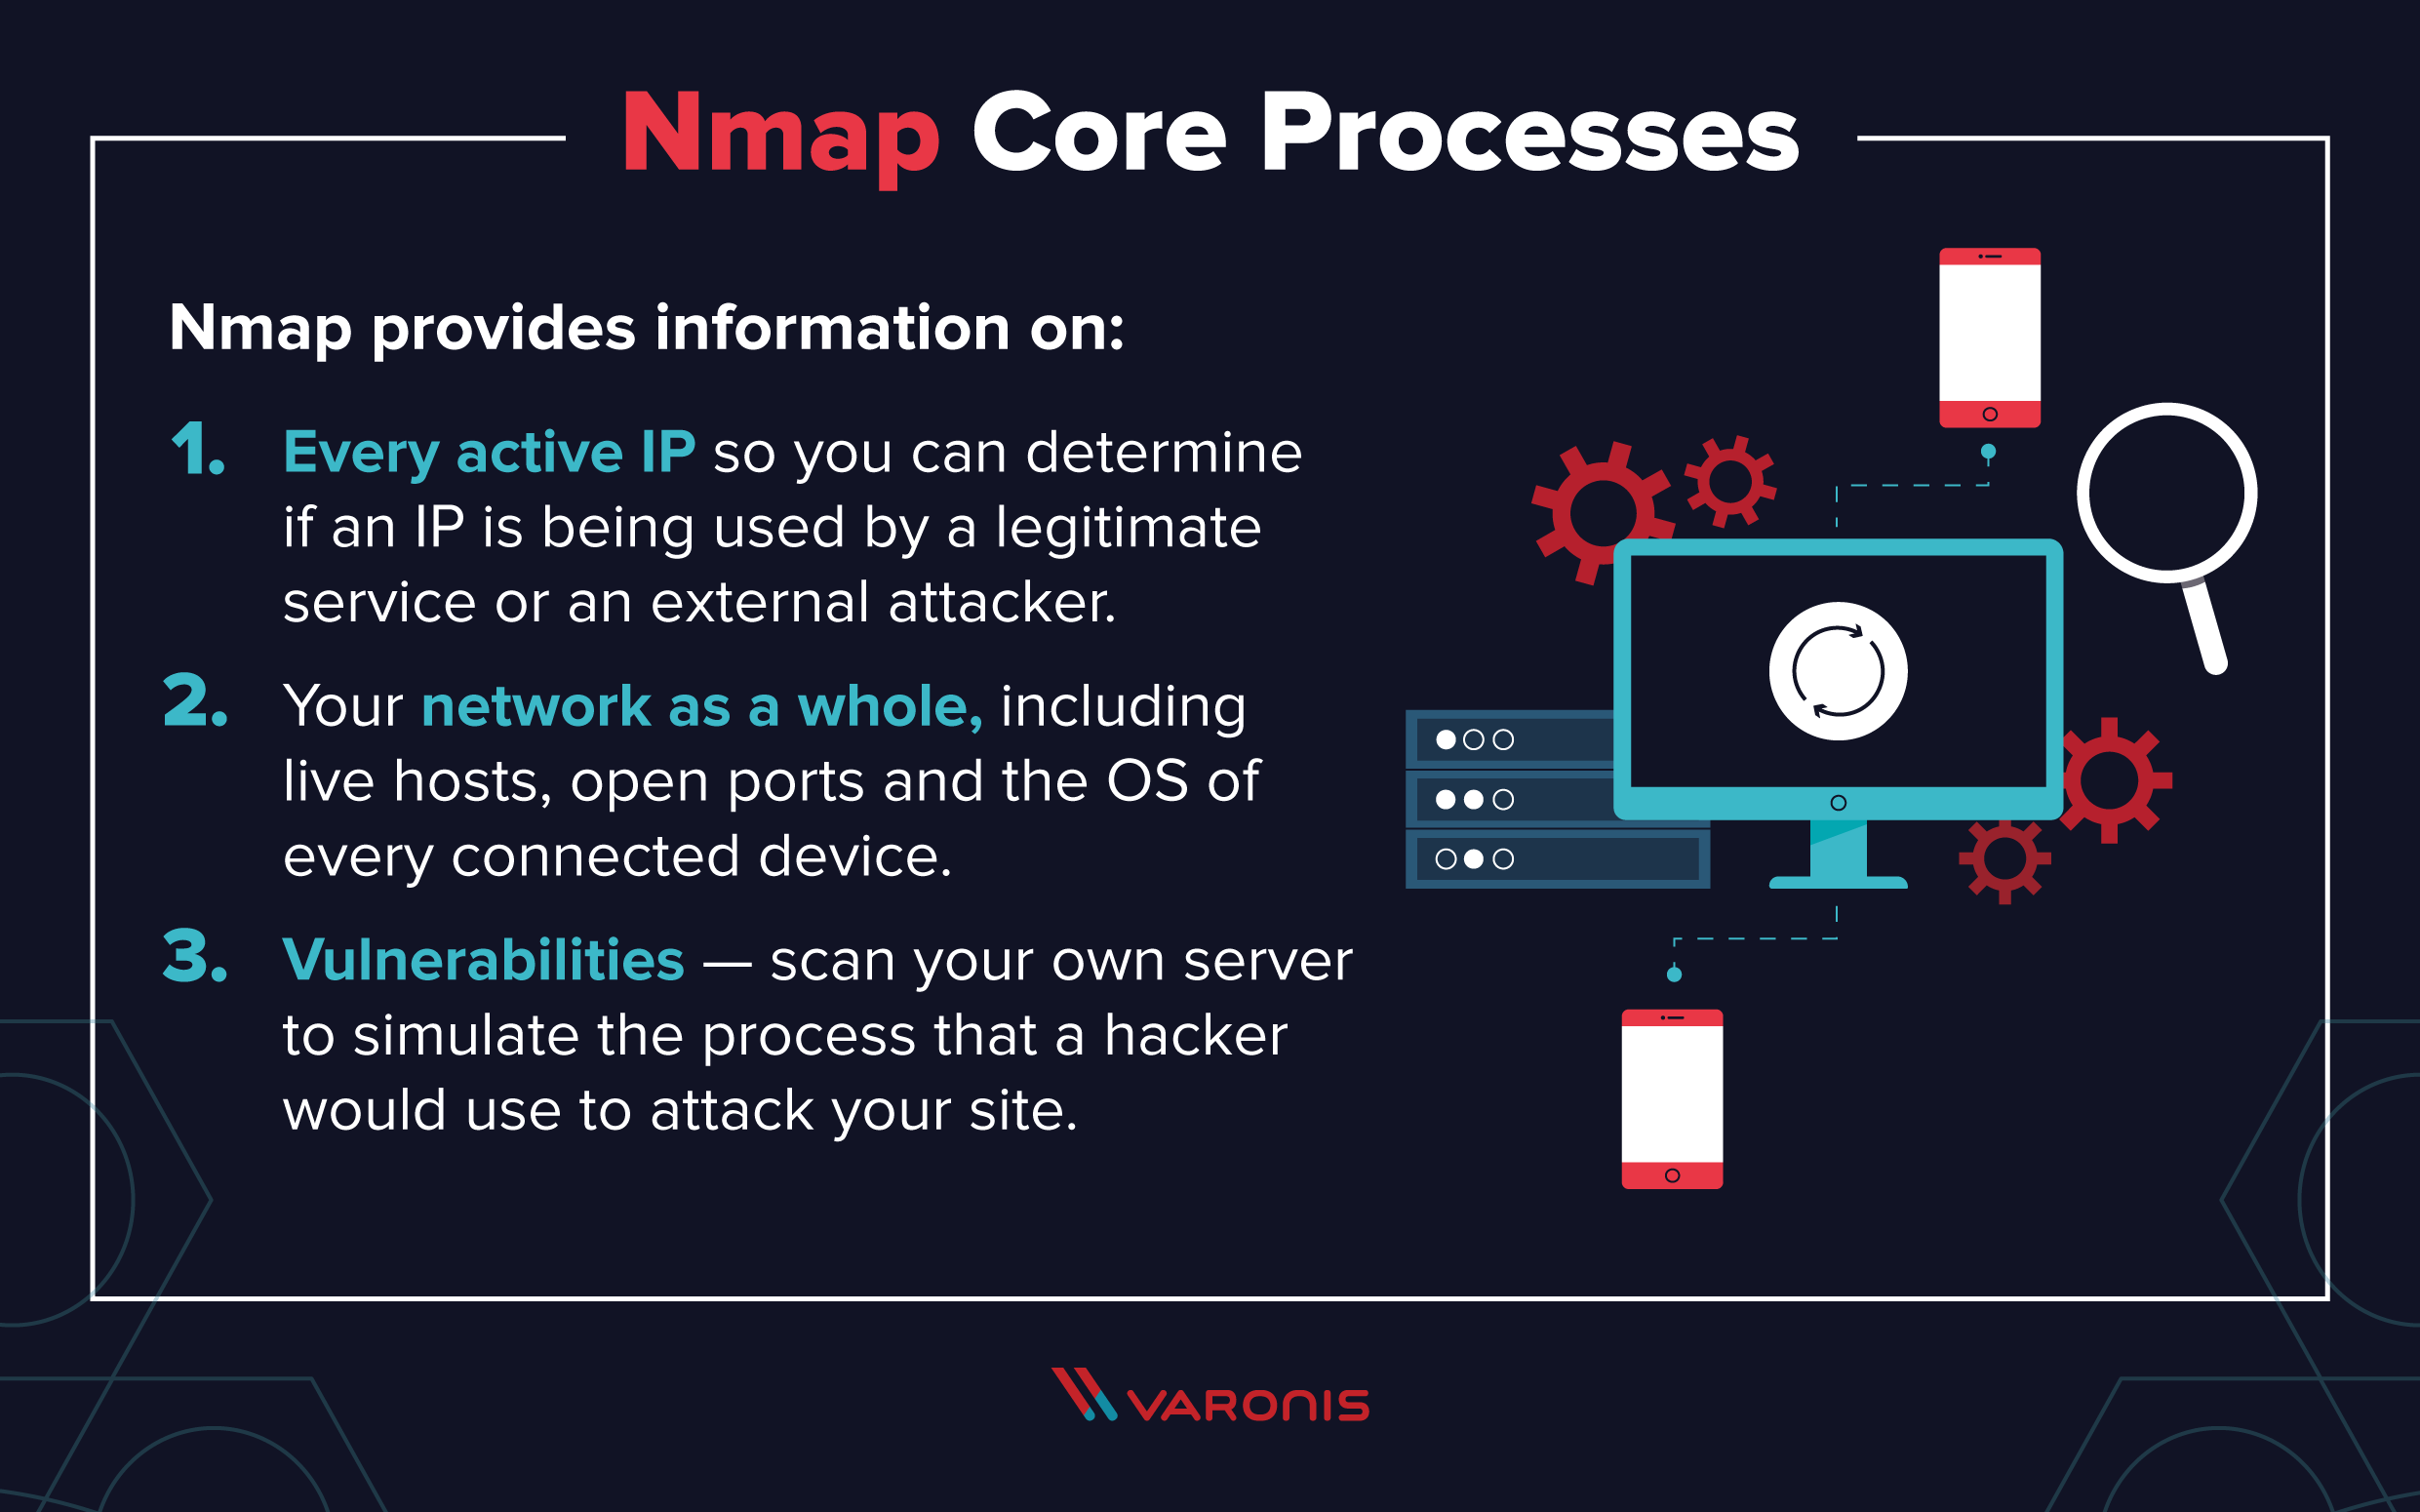 core processes of Nmap